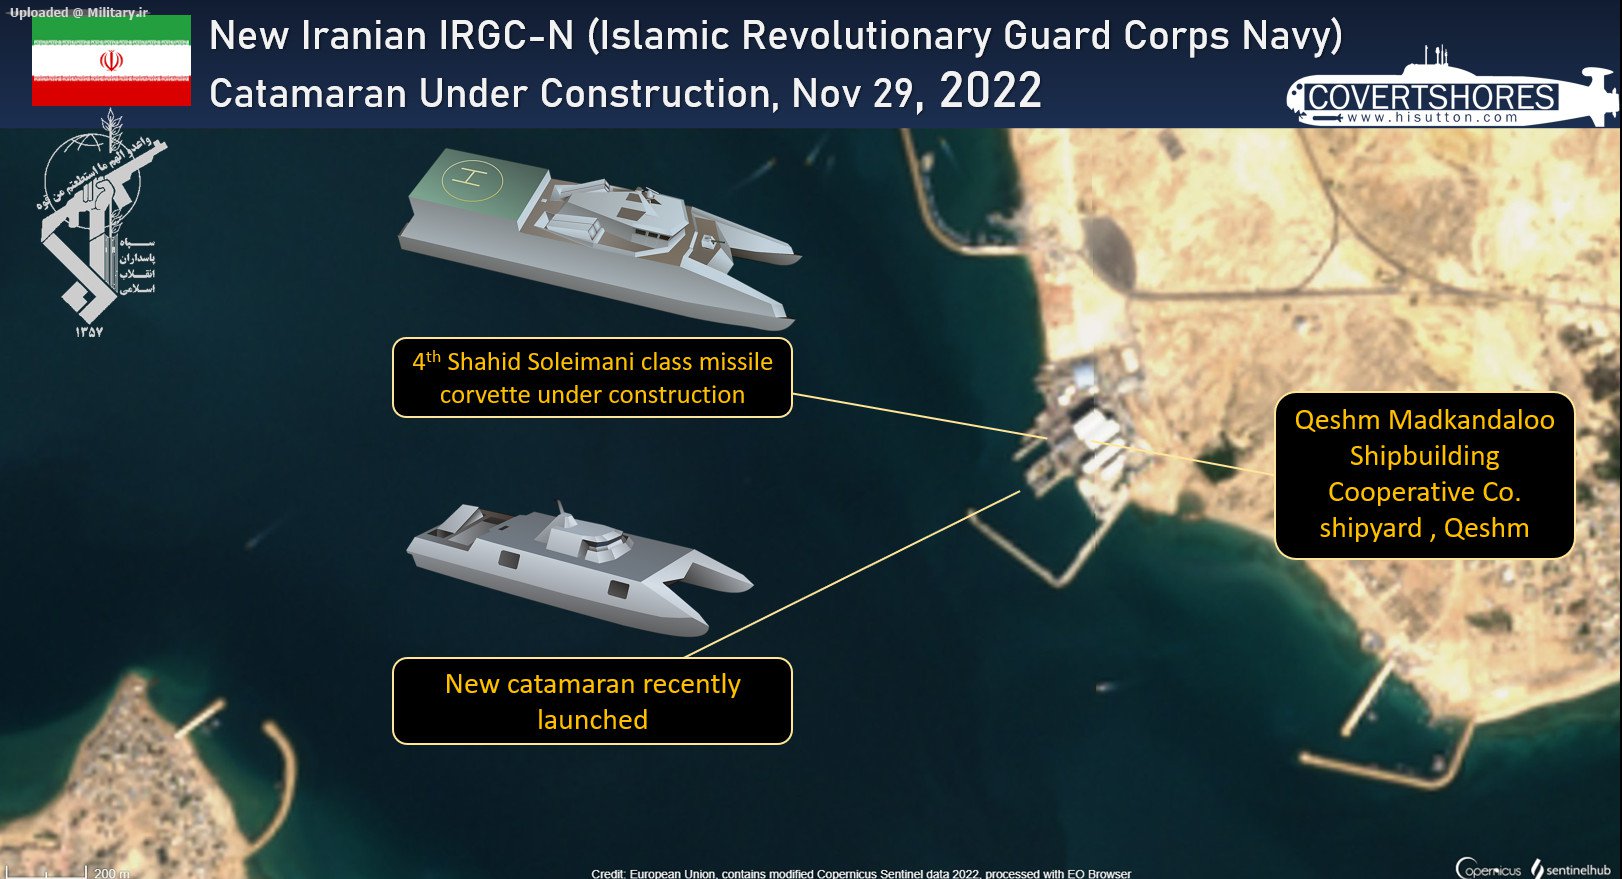 Iran-IRGC-Catamaran-Construction.jpg